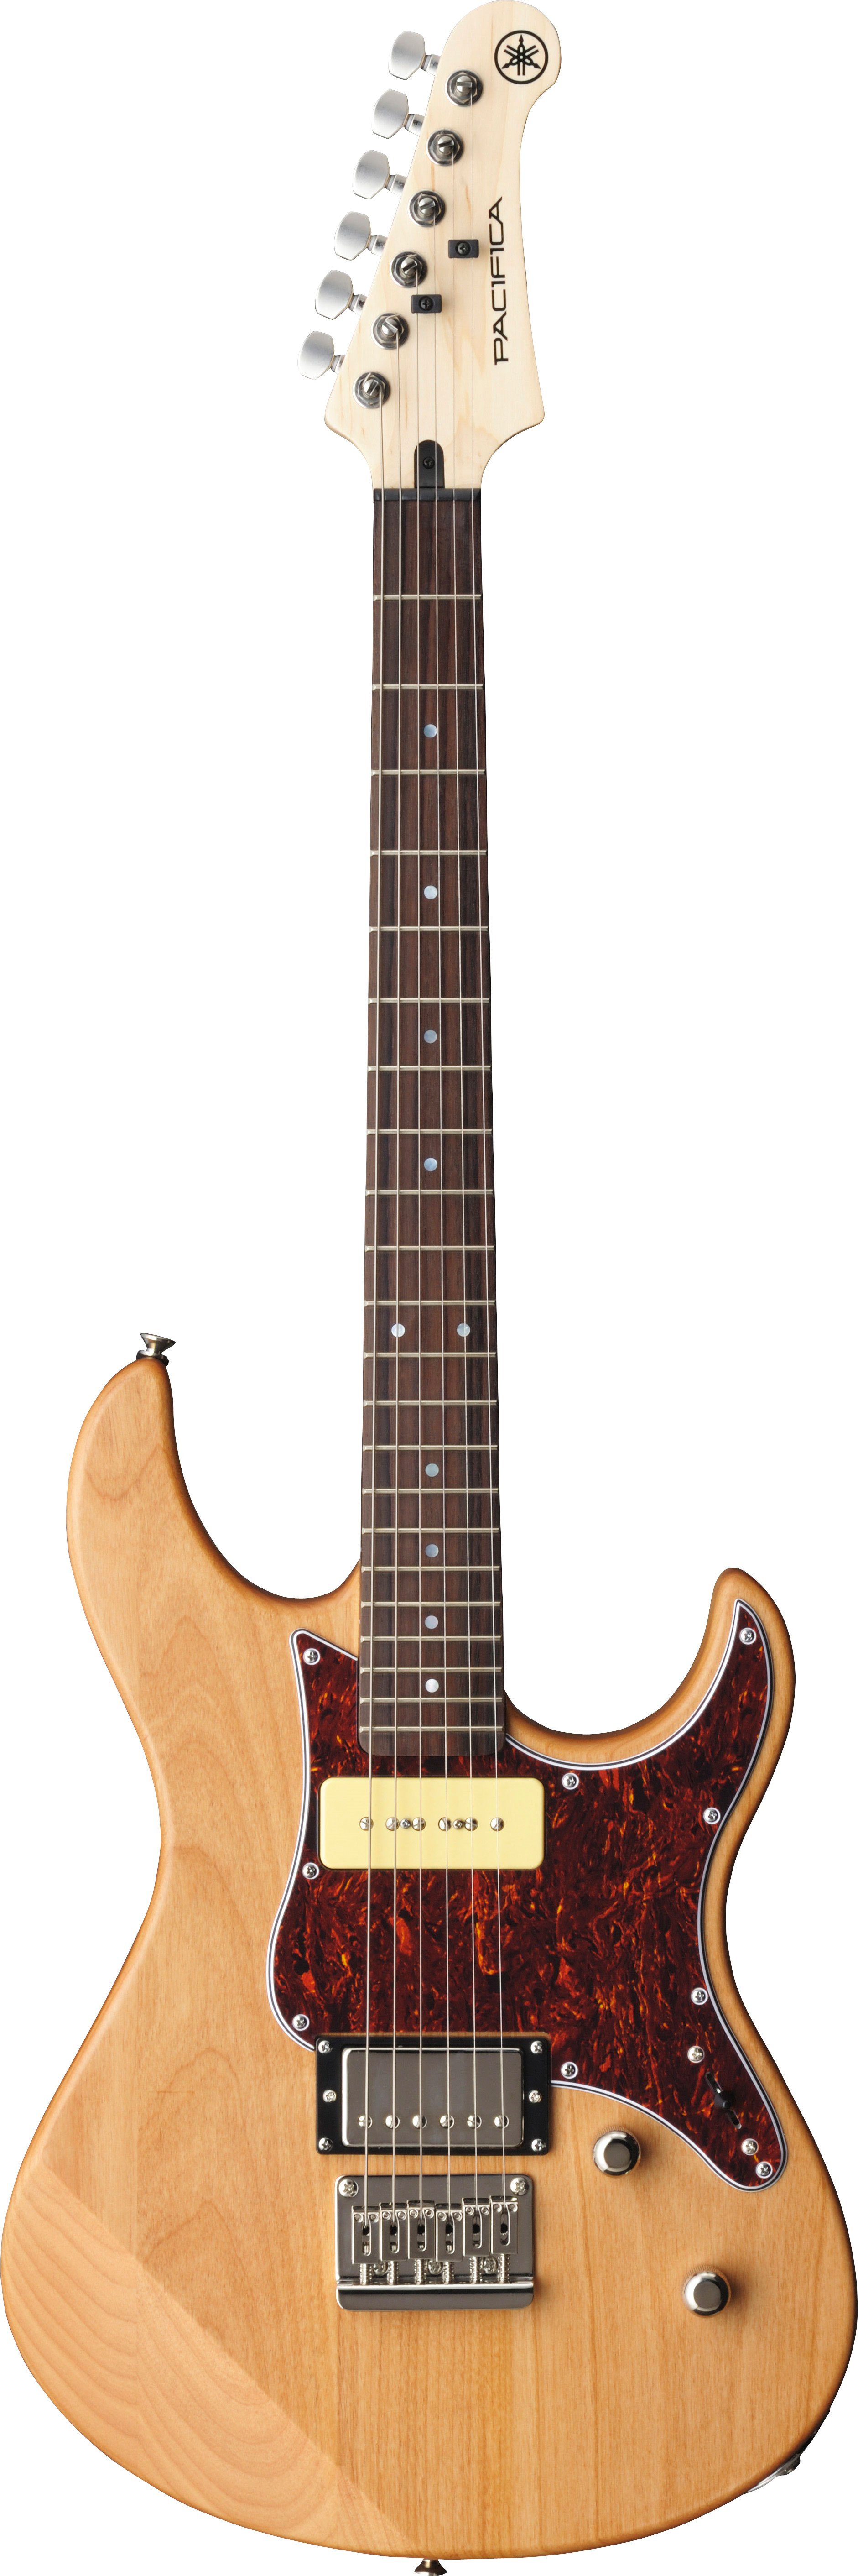 Yamaha Pacifica Pac311h - Natural Satin - Str shape electric guitar - Variation 4